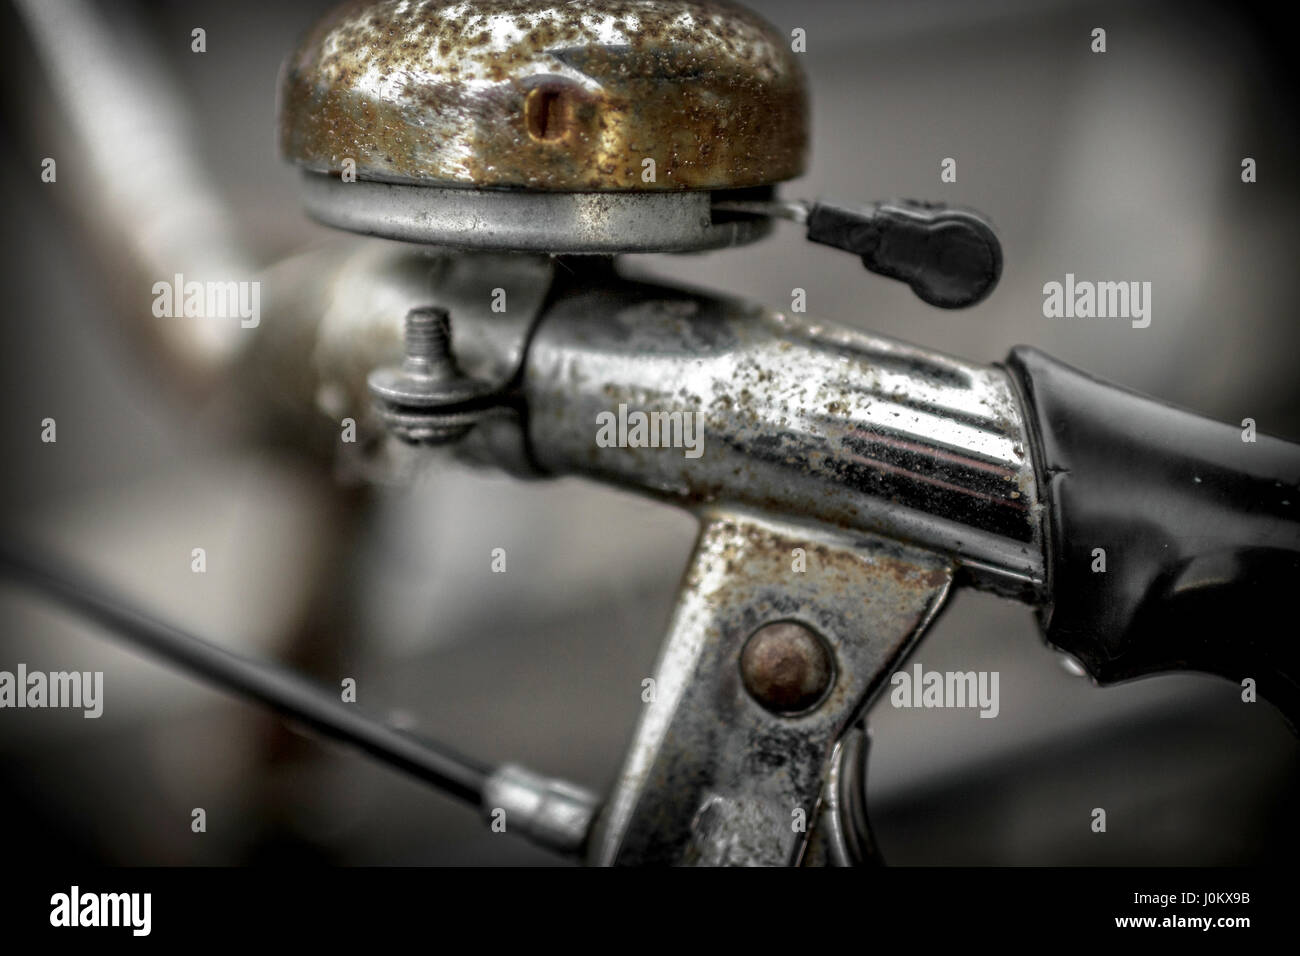 Fahrradklingel -Fotos und -Bildmaterial in hoher Auflösung – Alamy